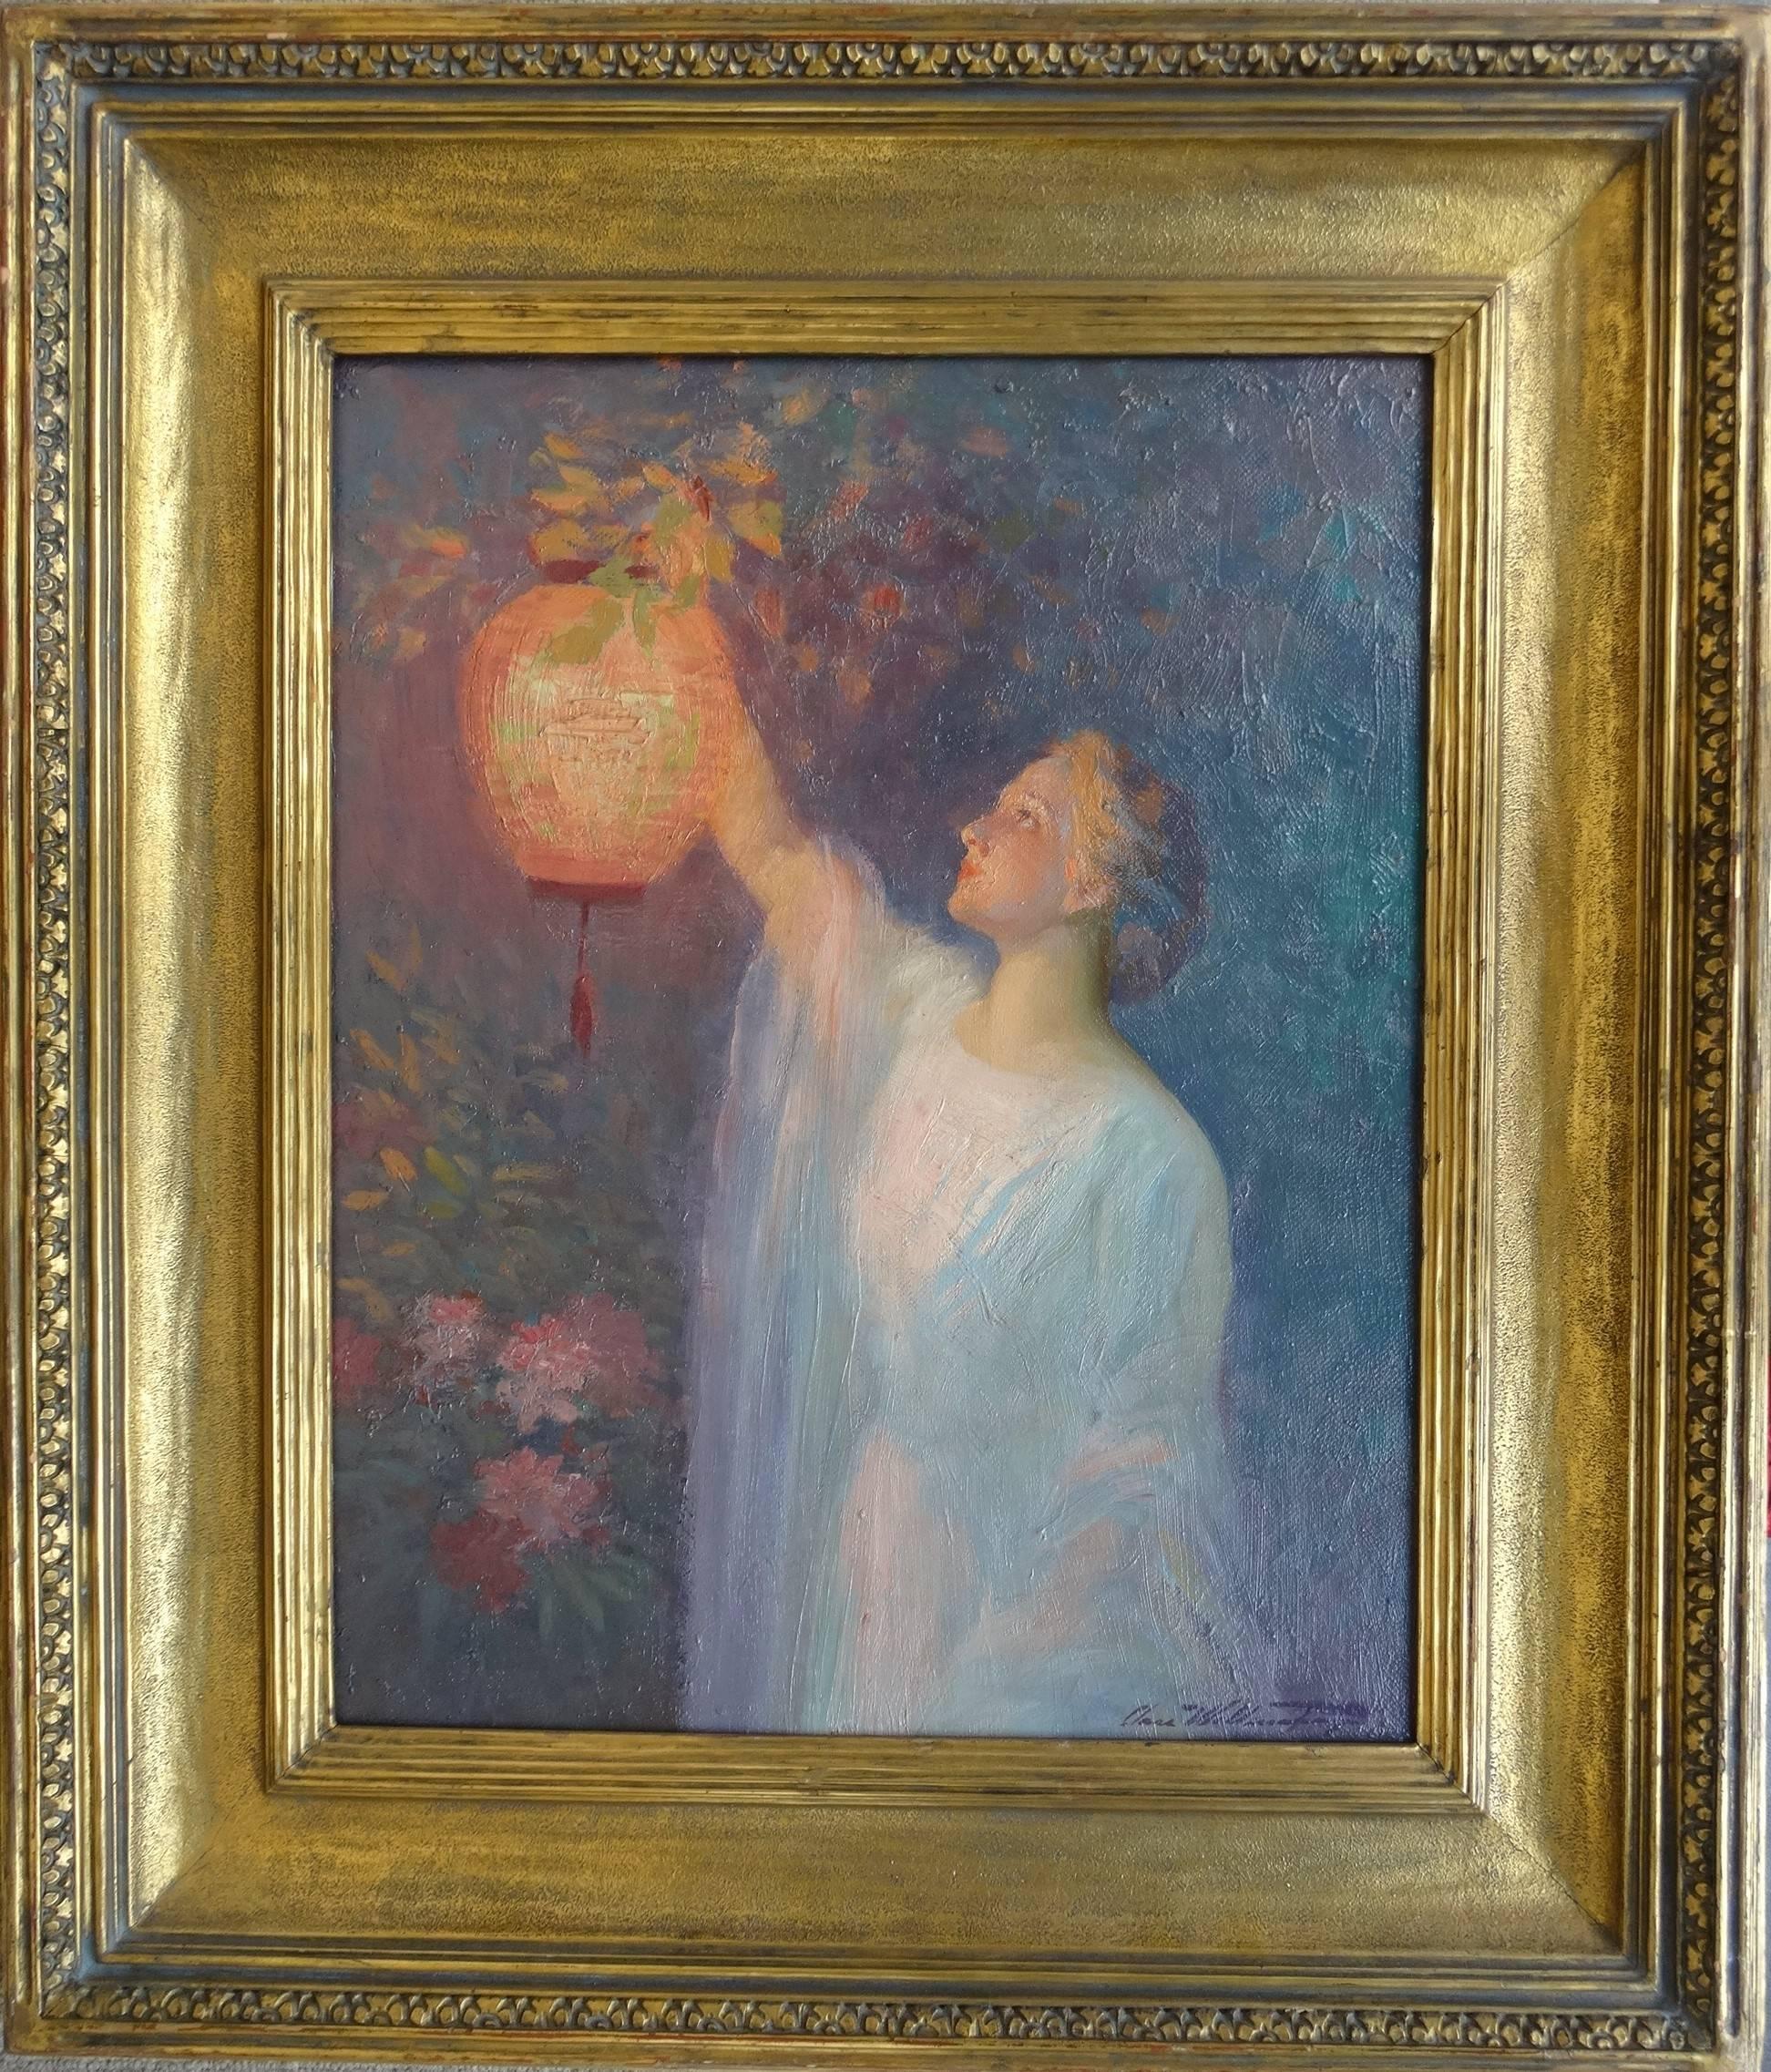 Charles E. Waltensperger Figurative Painting - "Lantern Glow"